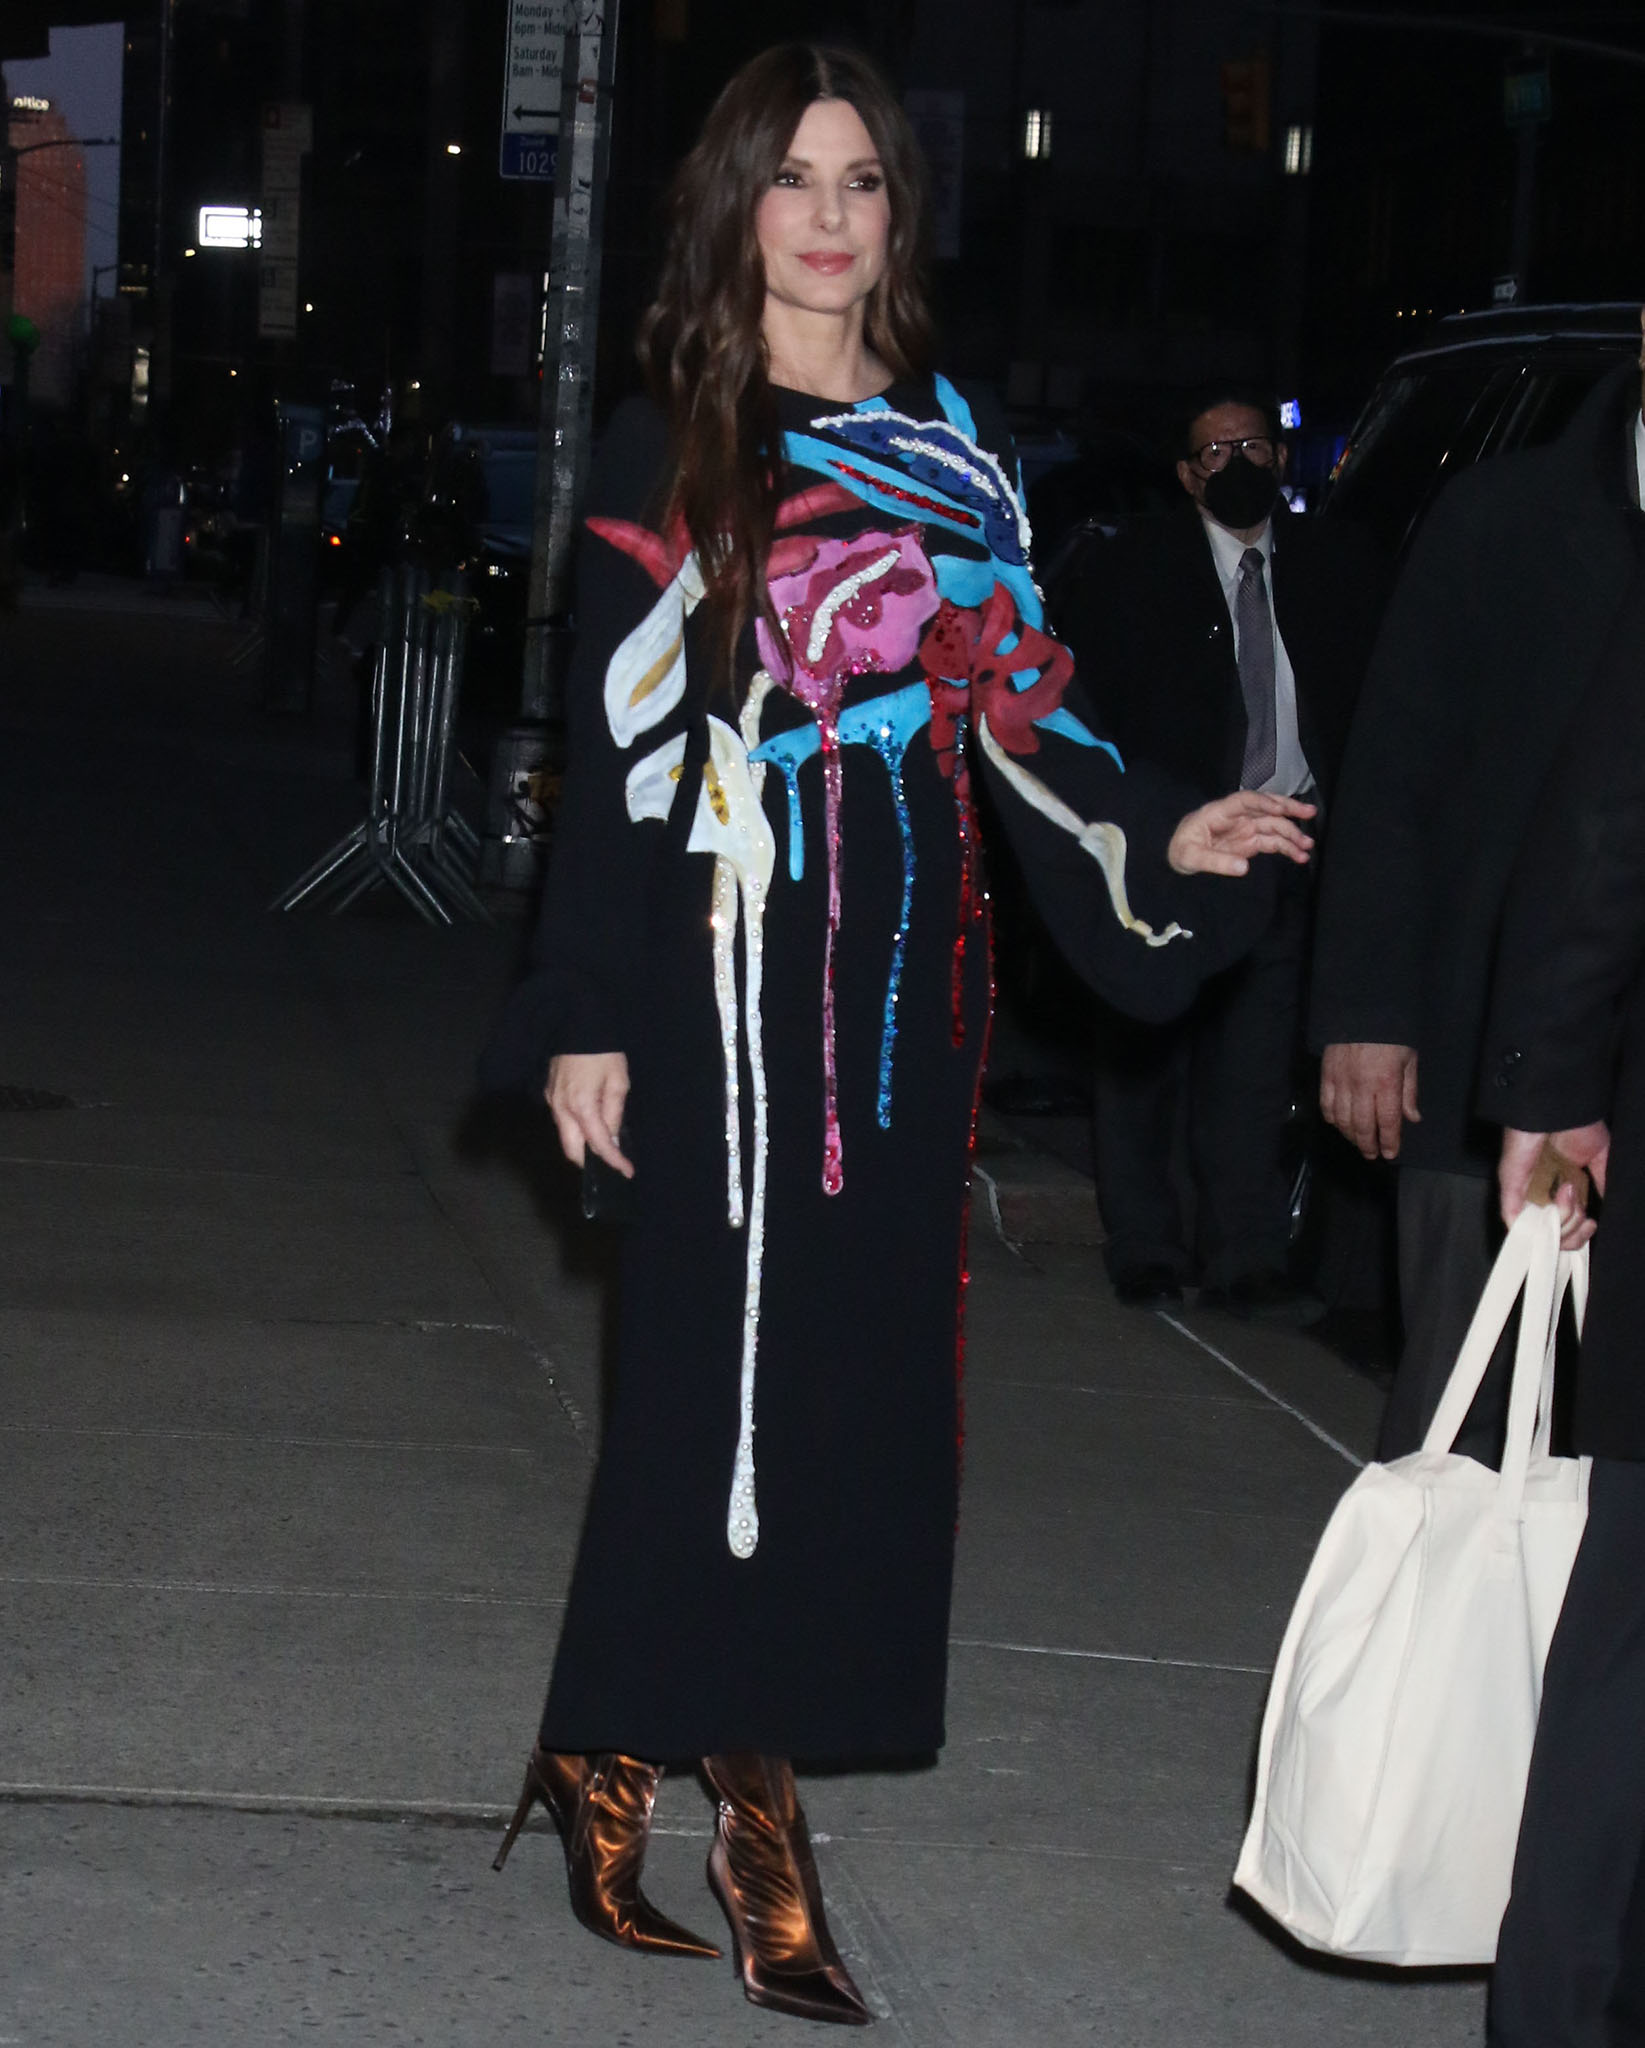 Sandra Bullock attends the New York premiere of The Lost City in Stella Jean black midi dress on March 14, 2022